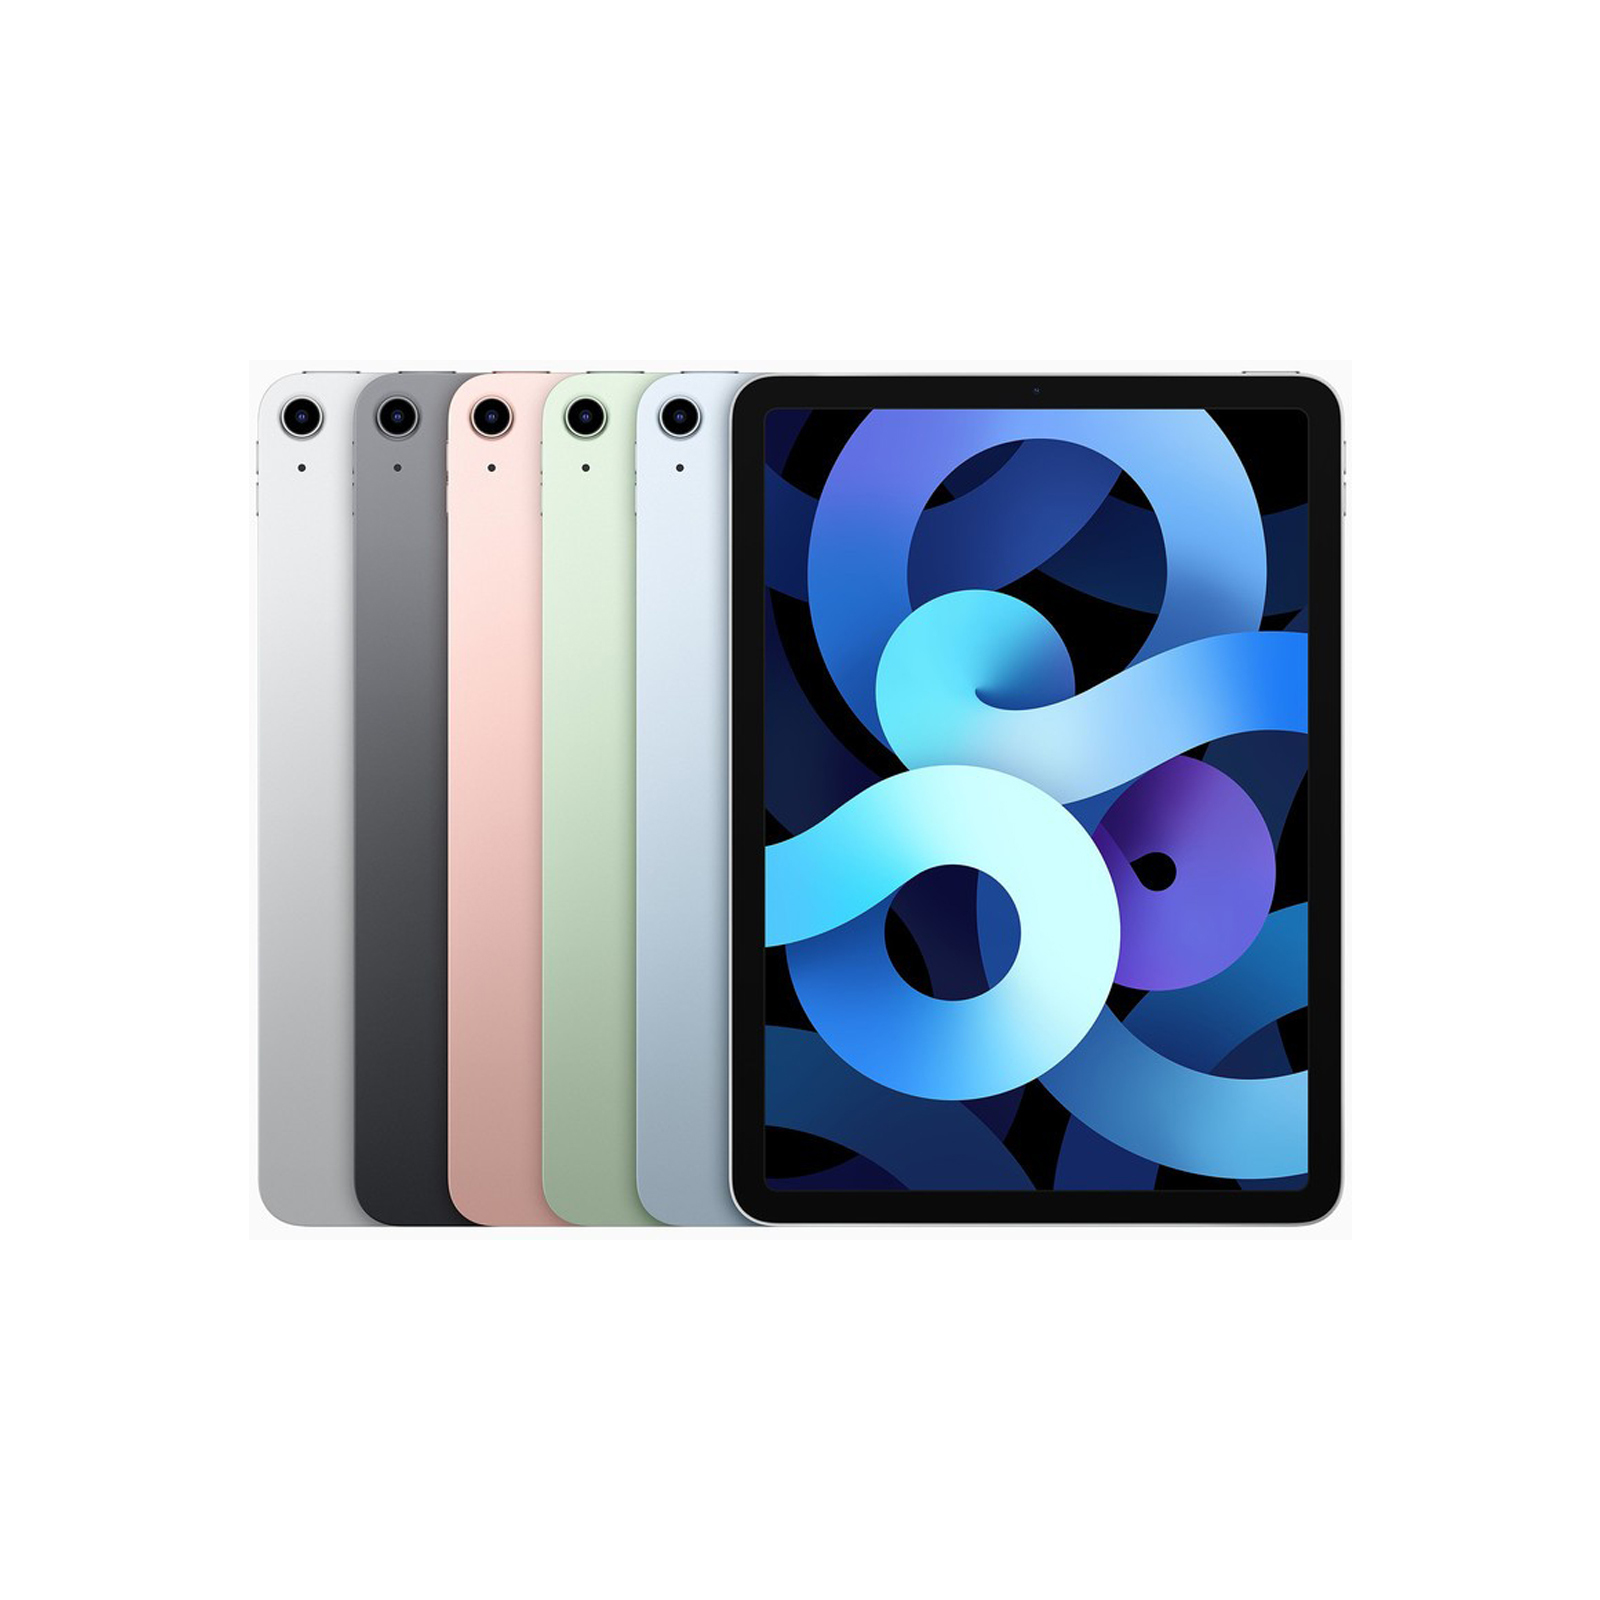 Apple iPad Air 4 (A2316) Wi-Fi - As New